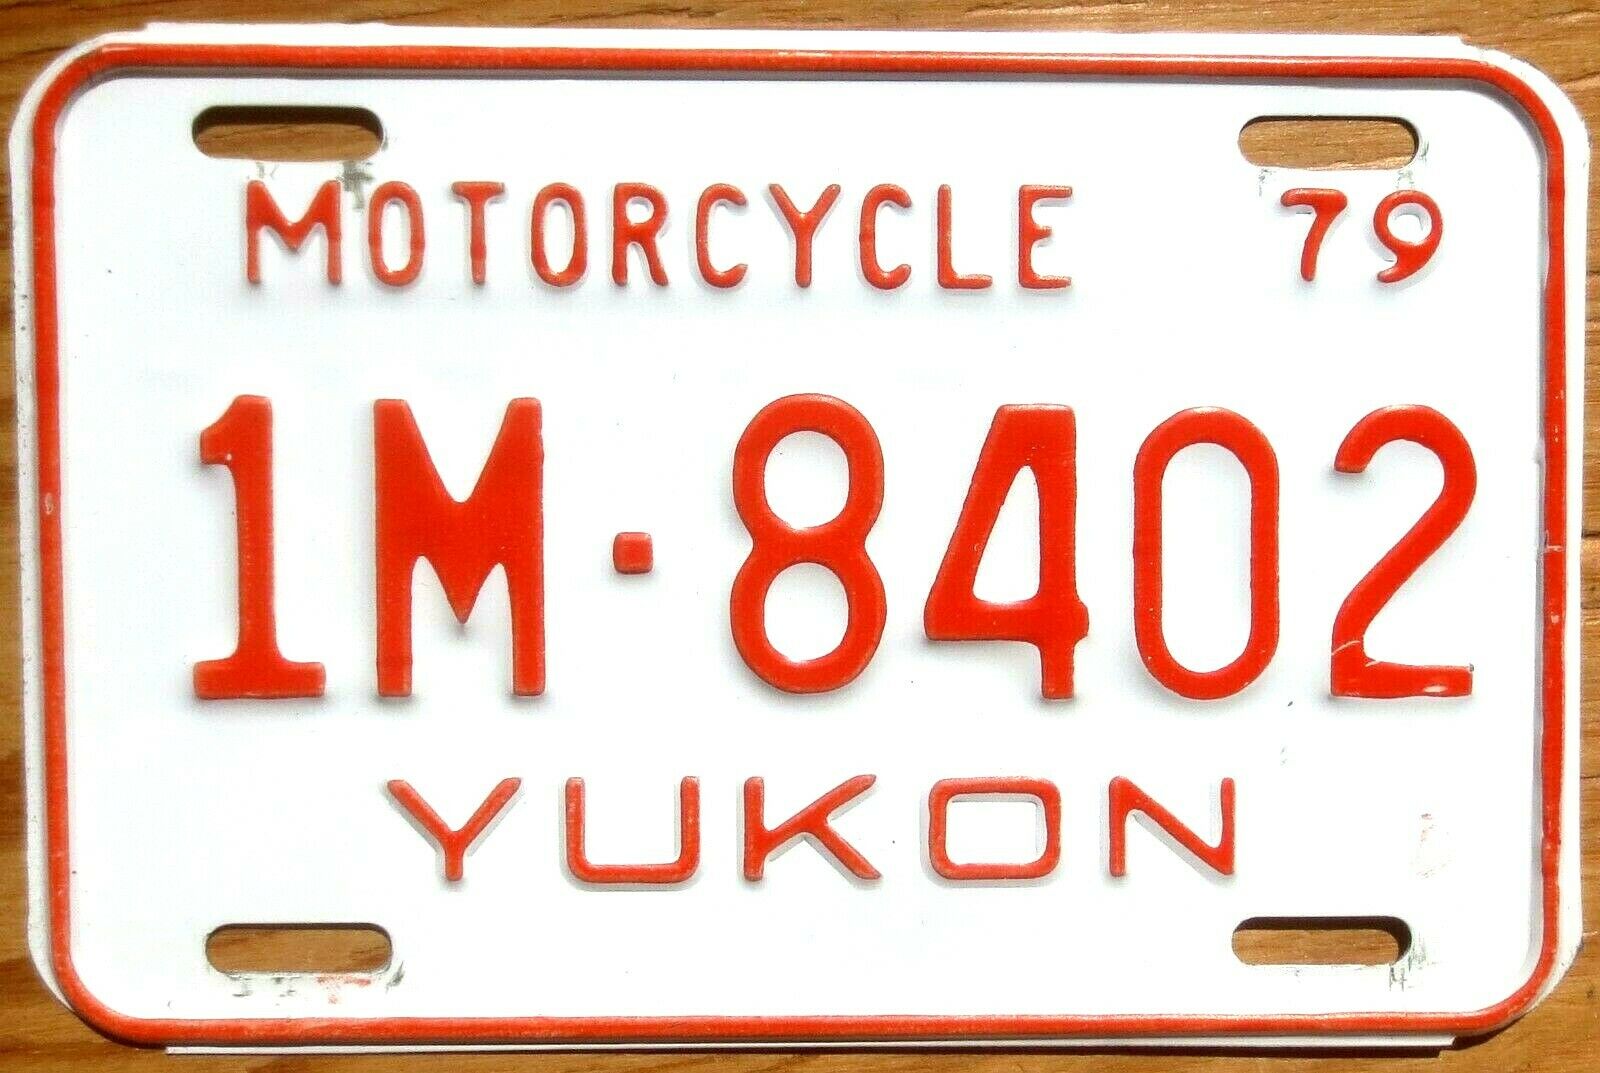 1979 Yukon Motorcycle License Plate Number Tag - $2.99 Start